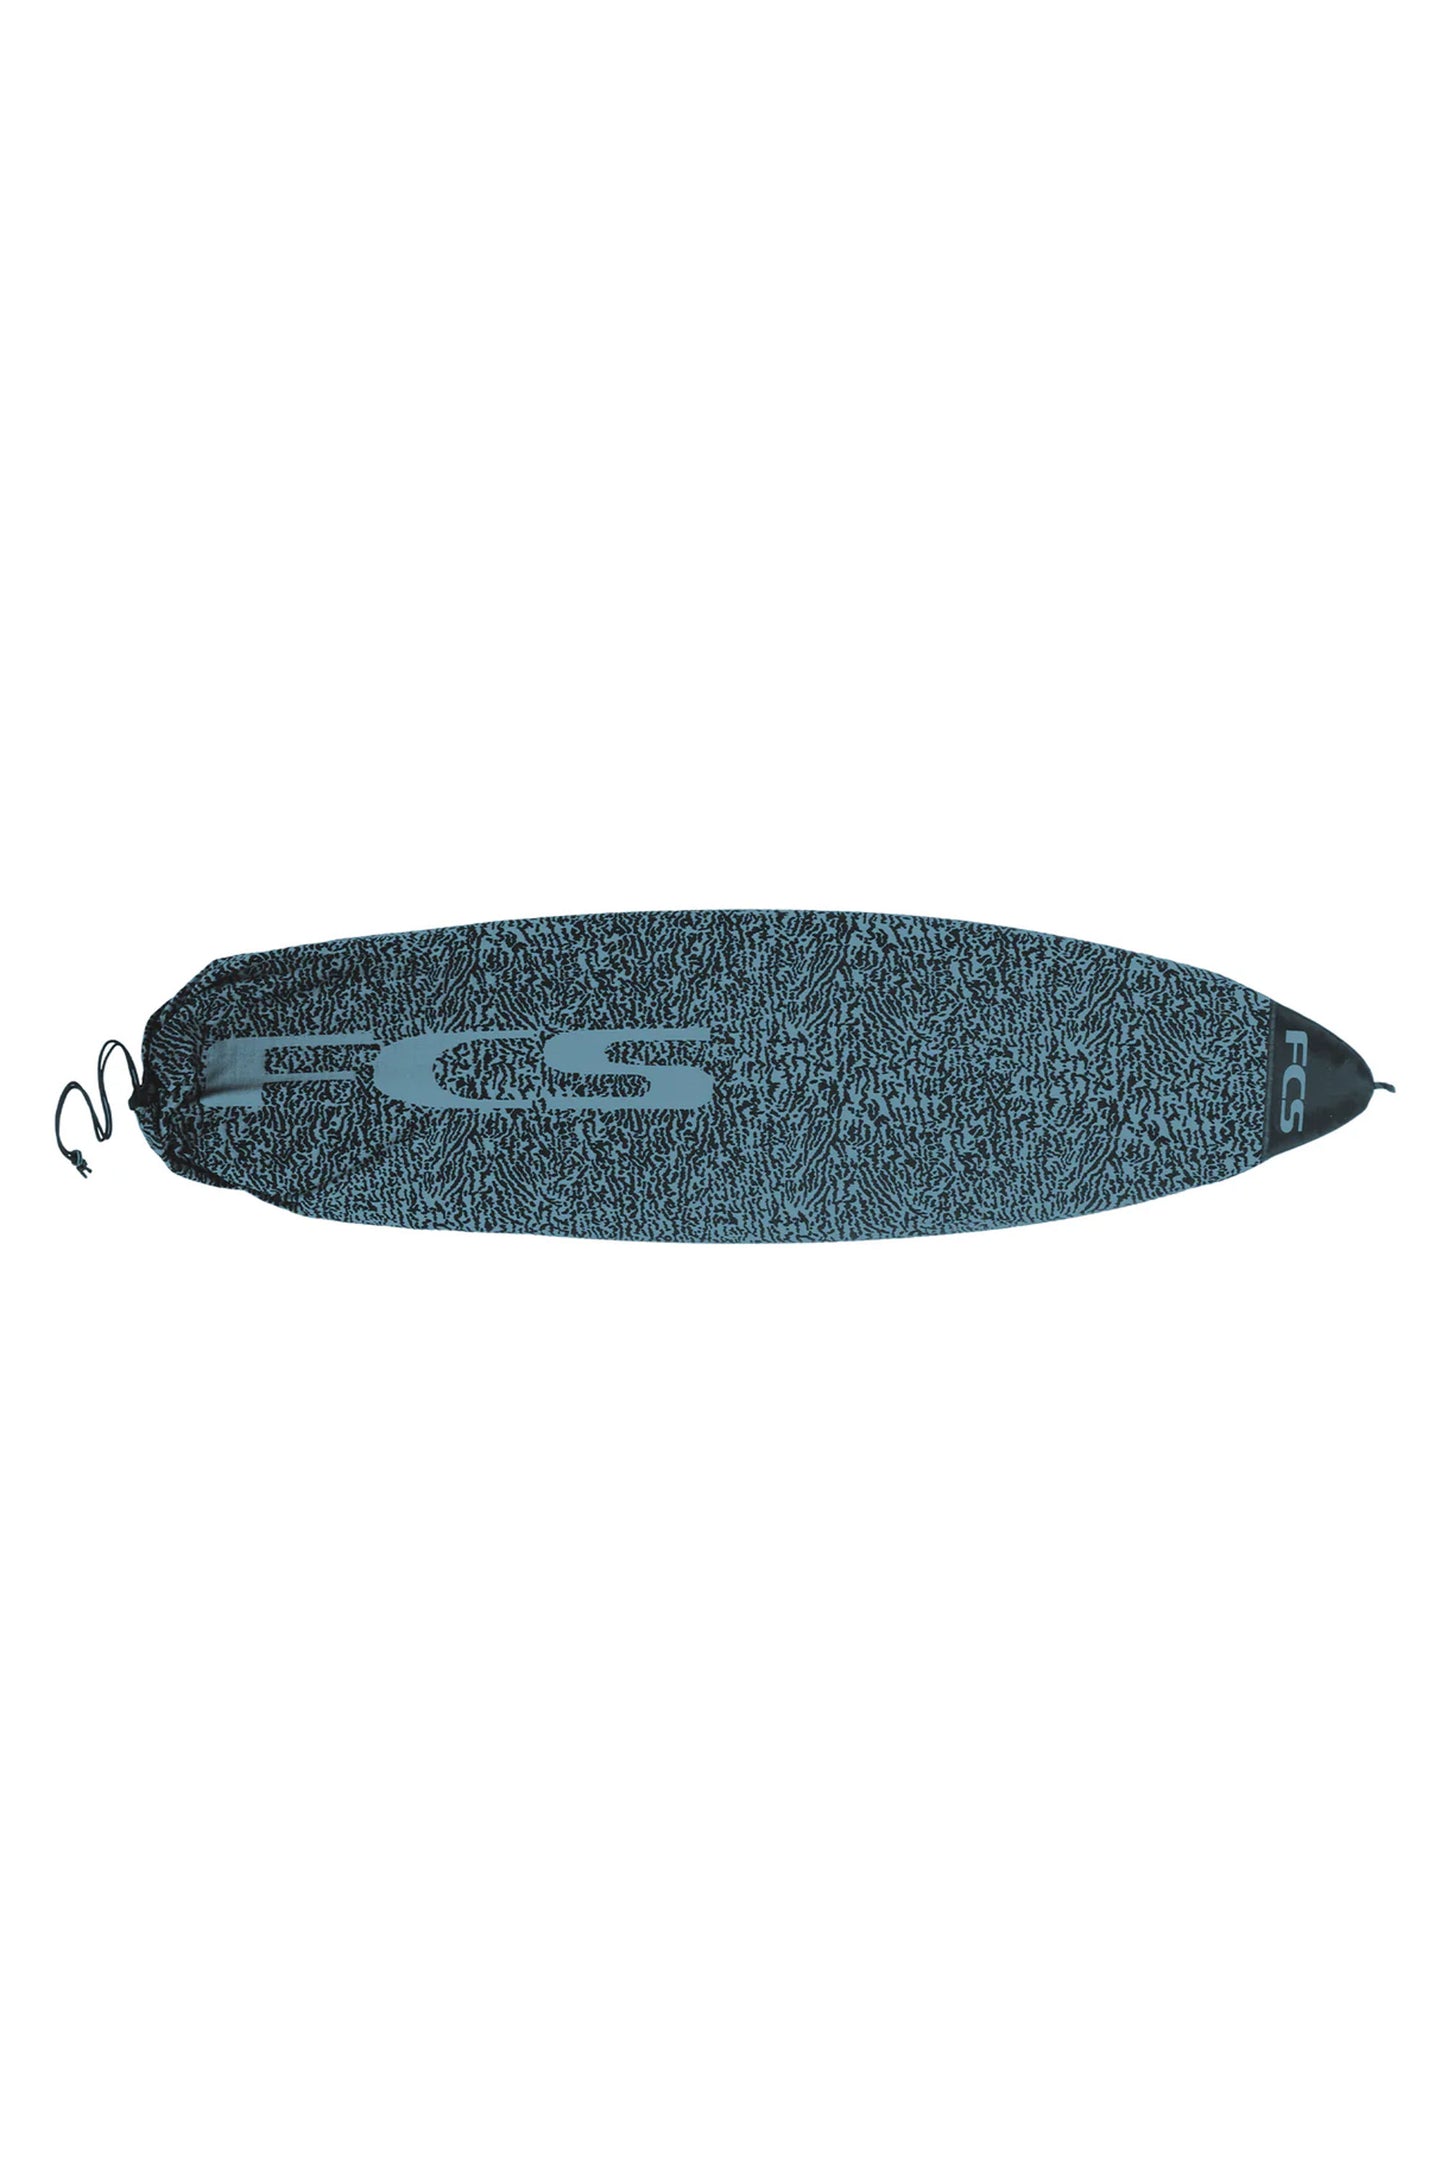 Pukas-Surf-Shop-fcs-stretch-fun-board-cover-tranquil-blue